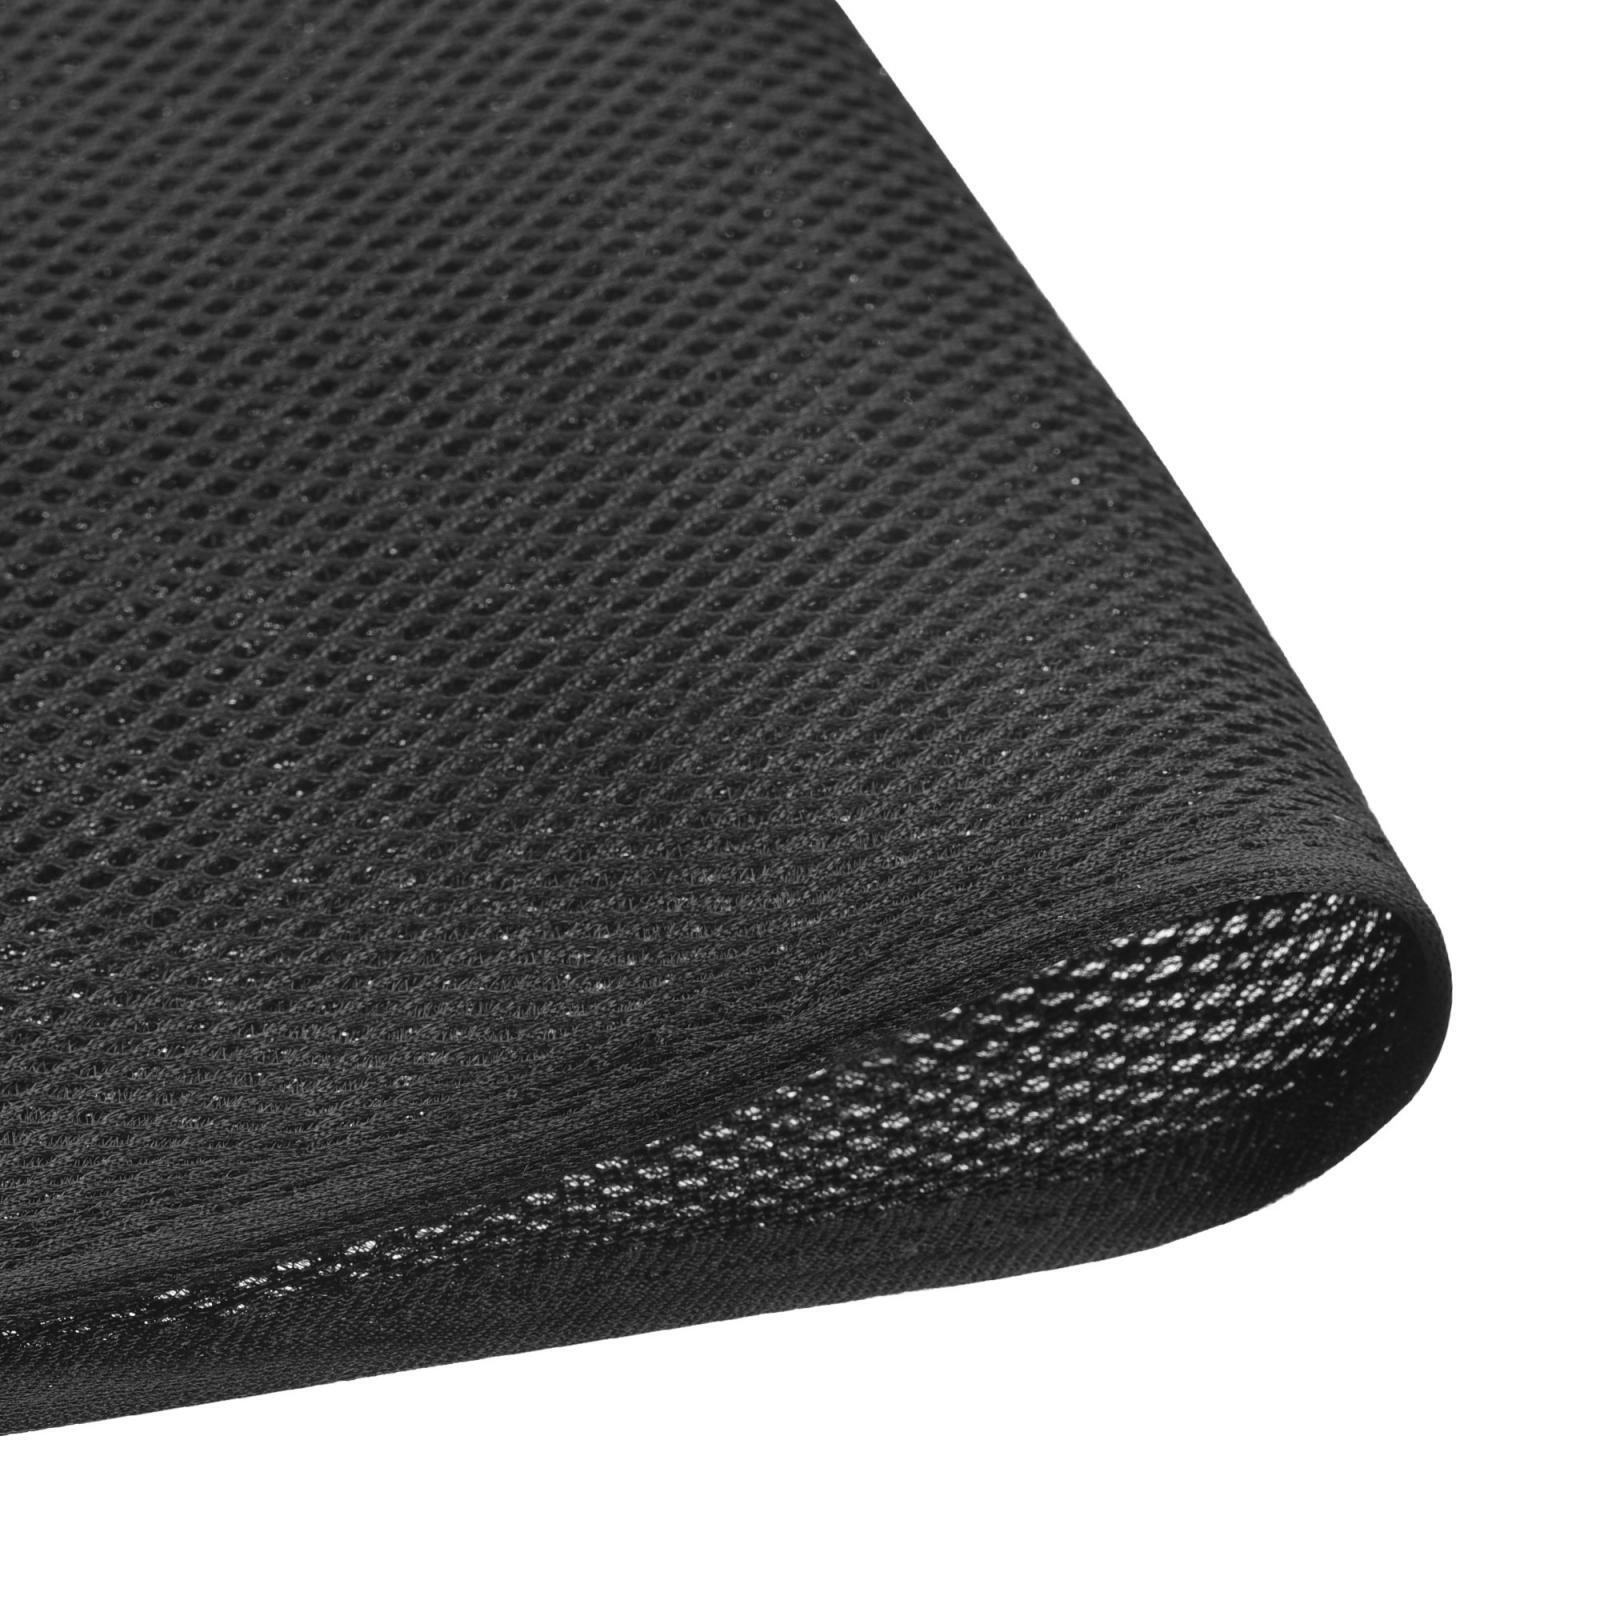 Speaker Grill Cloth 1.5x1.45m Polyester Fiber Stereo Mesh Fabric Black